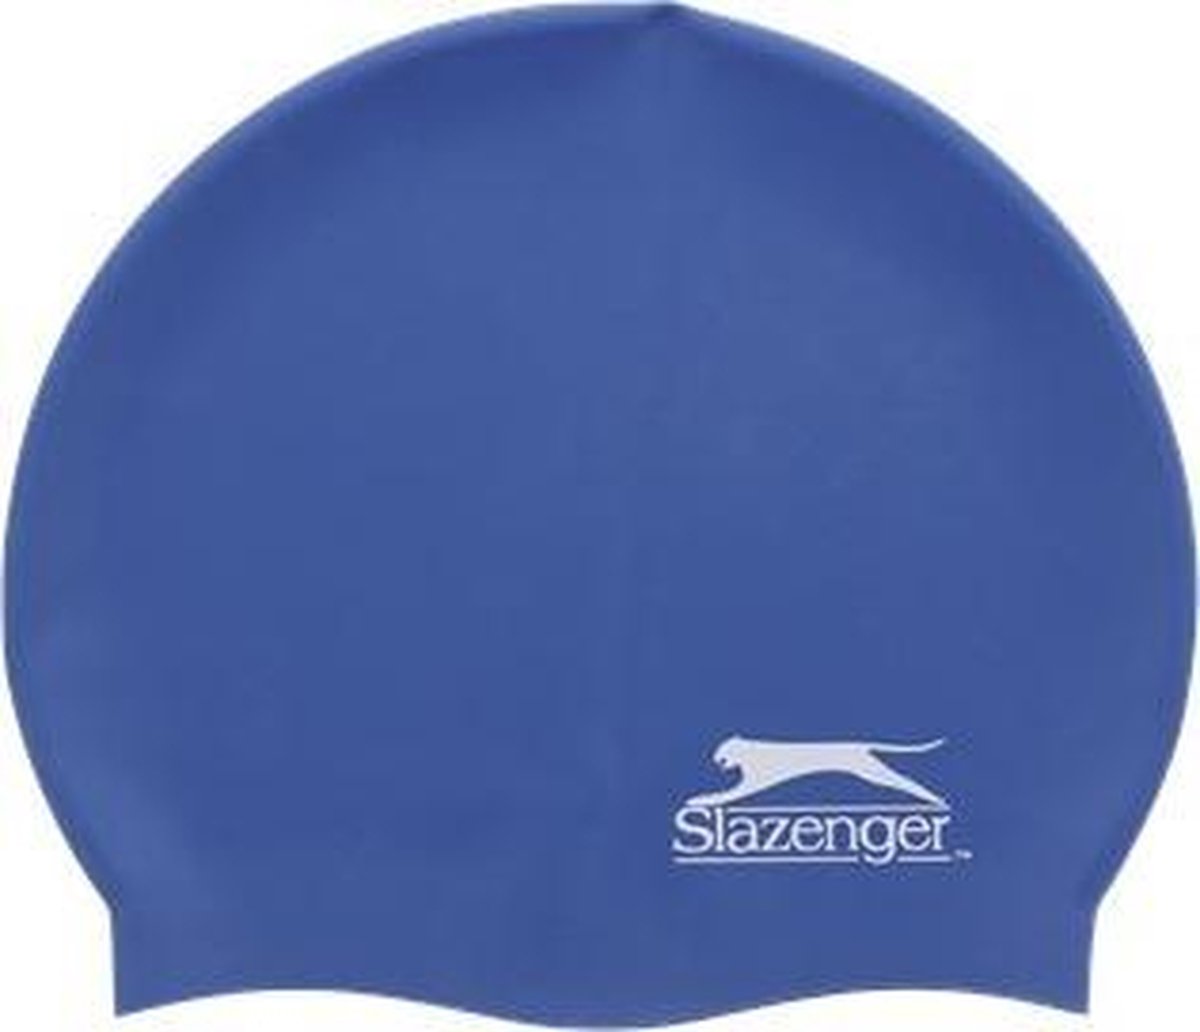 Slazenger badmuts blauw | bol.com